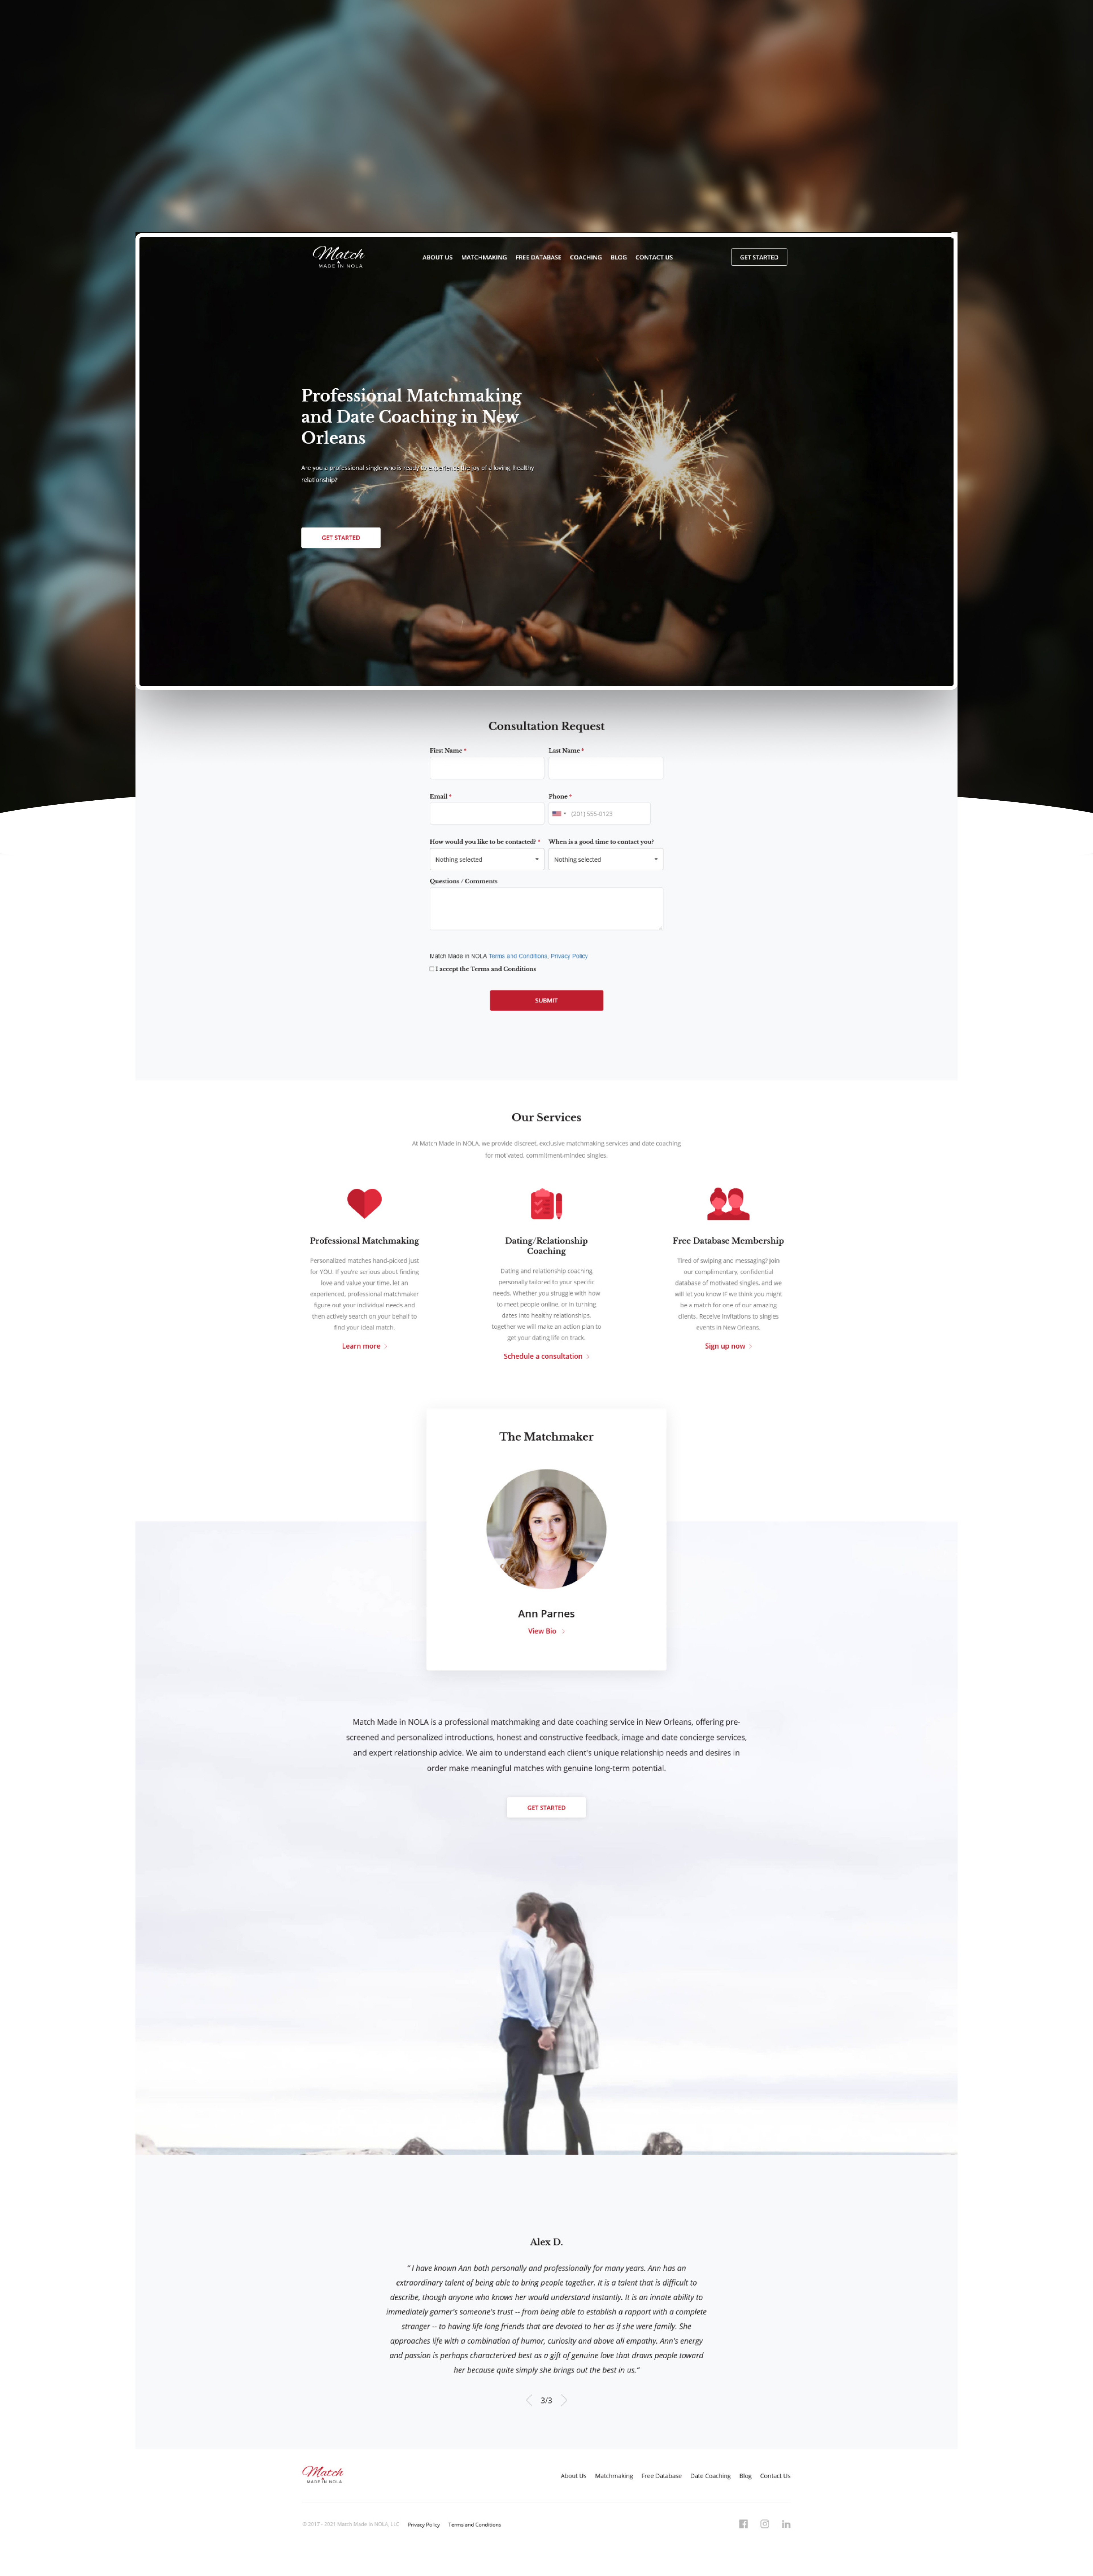 Custom web-design and development of the matchmaking website